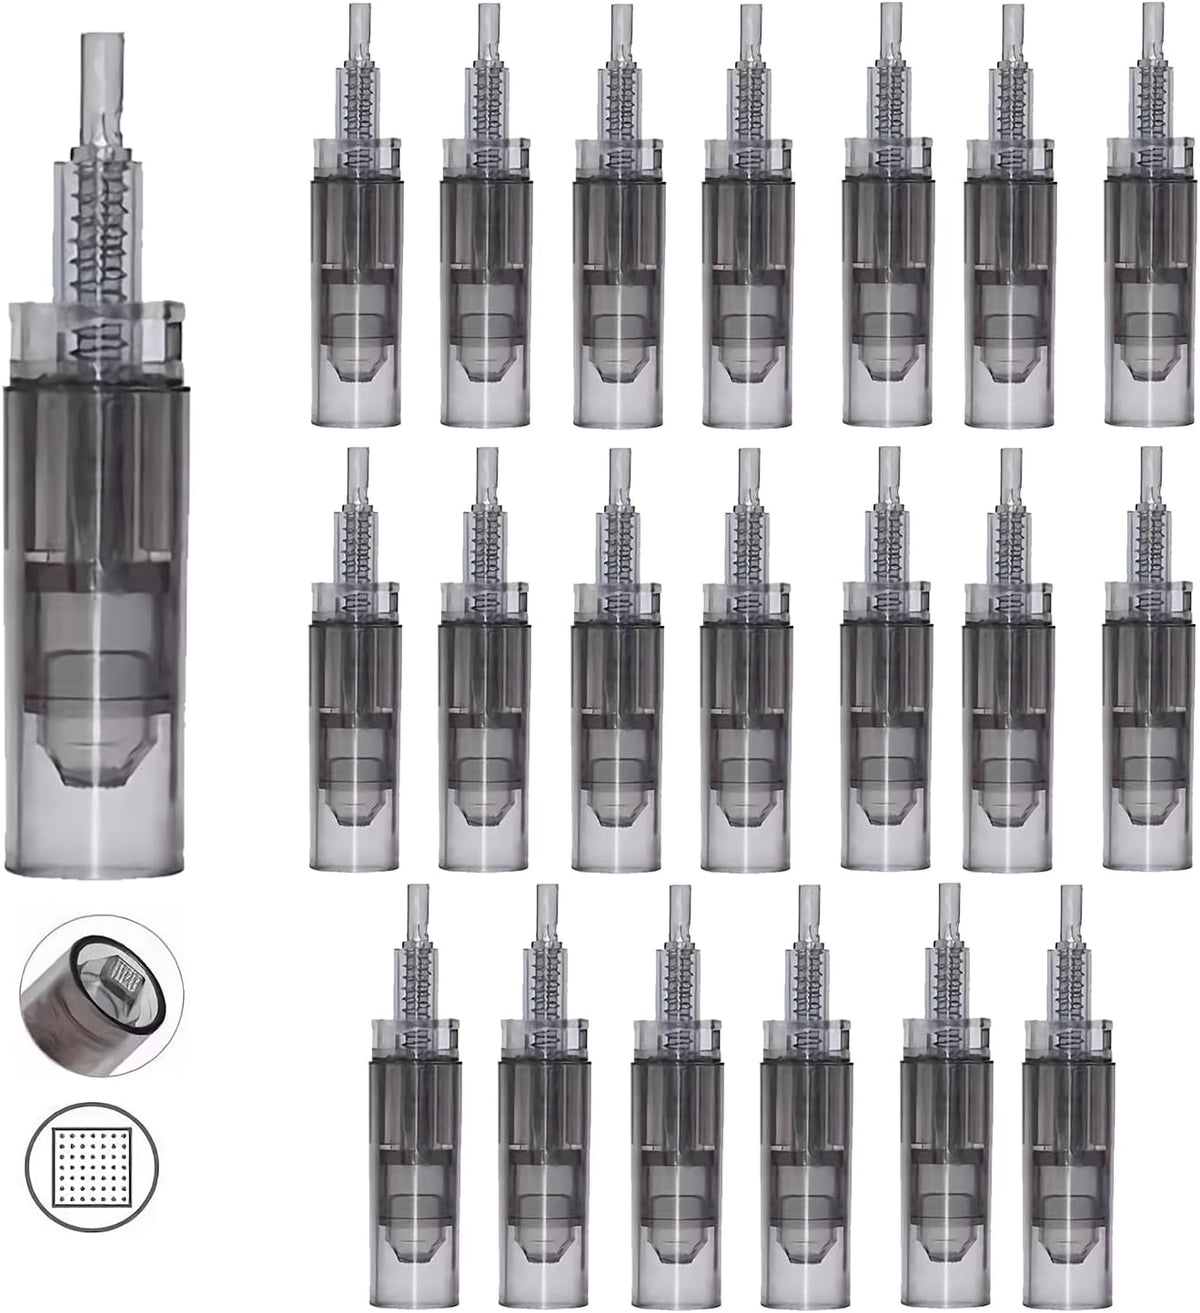 Dr.pen A7 Nano-5D Microneedling Pen Cartridges Needles Replacement